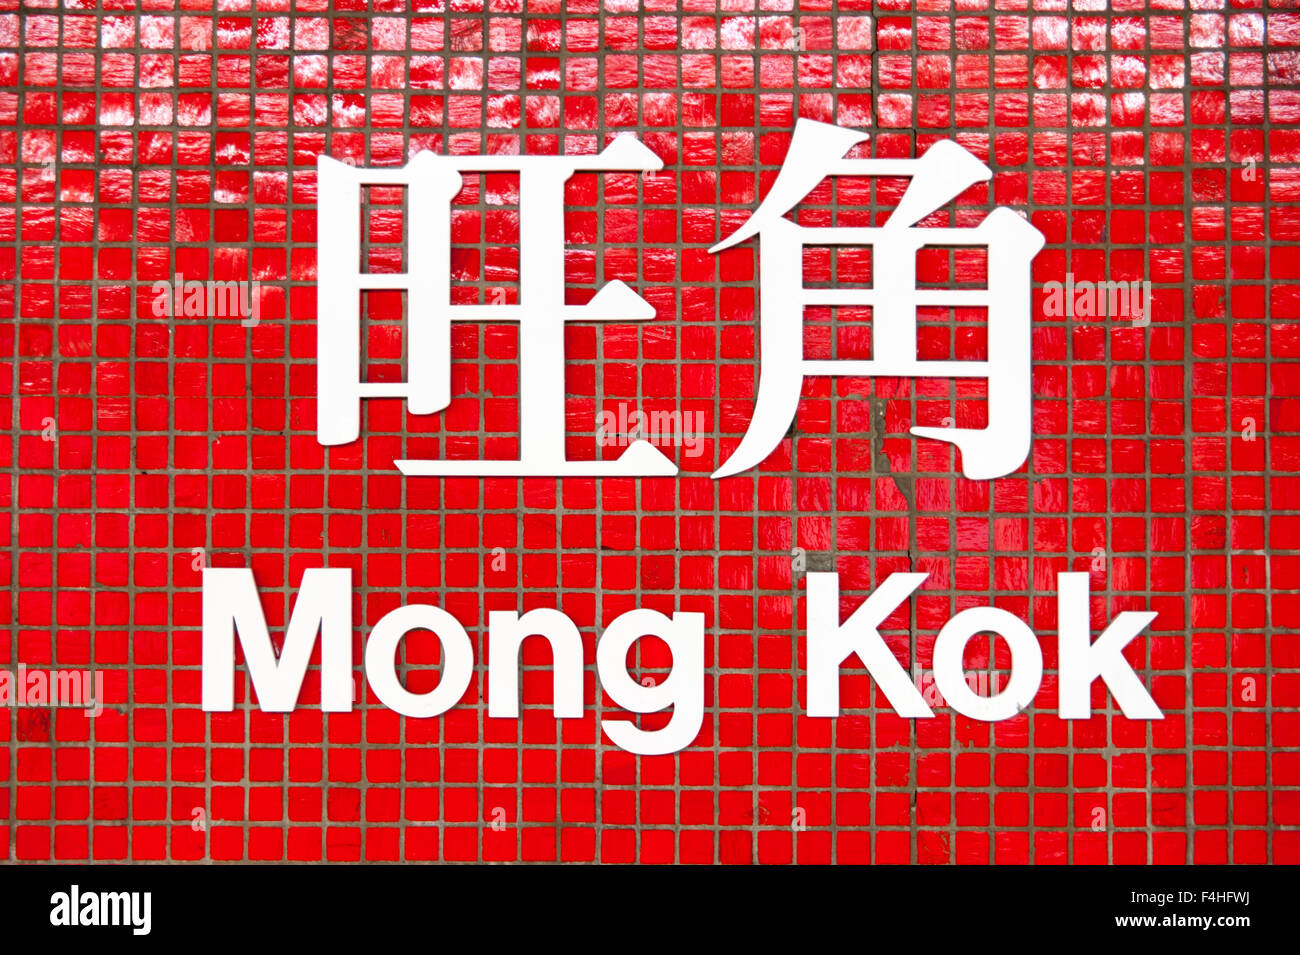 Das Wort Mong Kok, ein Ort in Hongkong Stockfoto